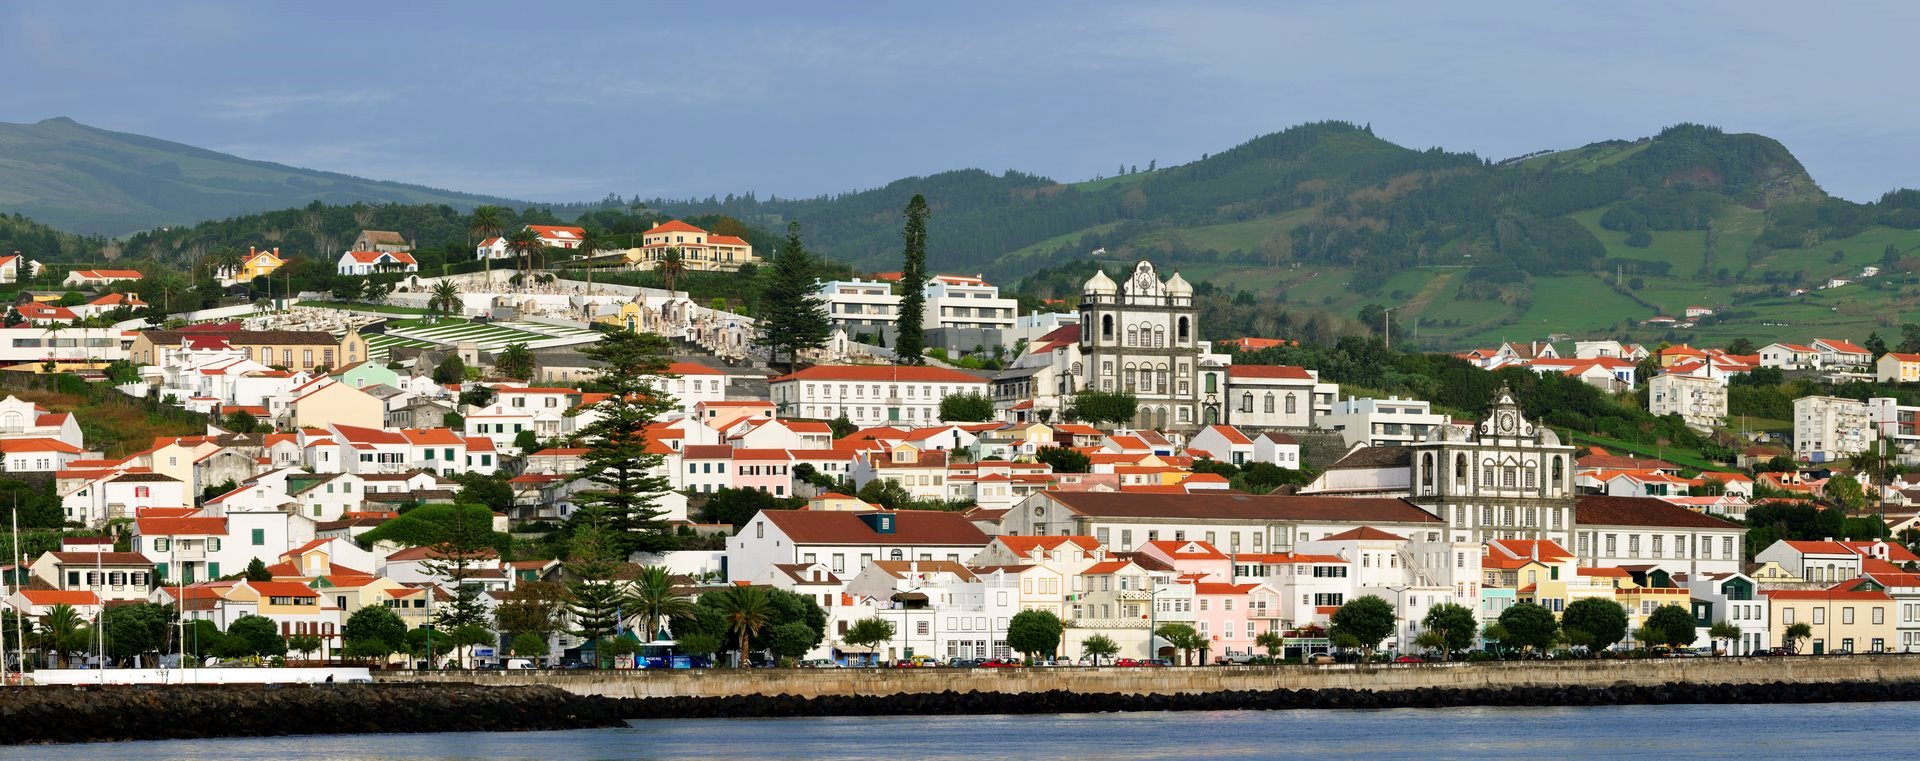 Horta City 1 - Faial Island